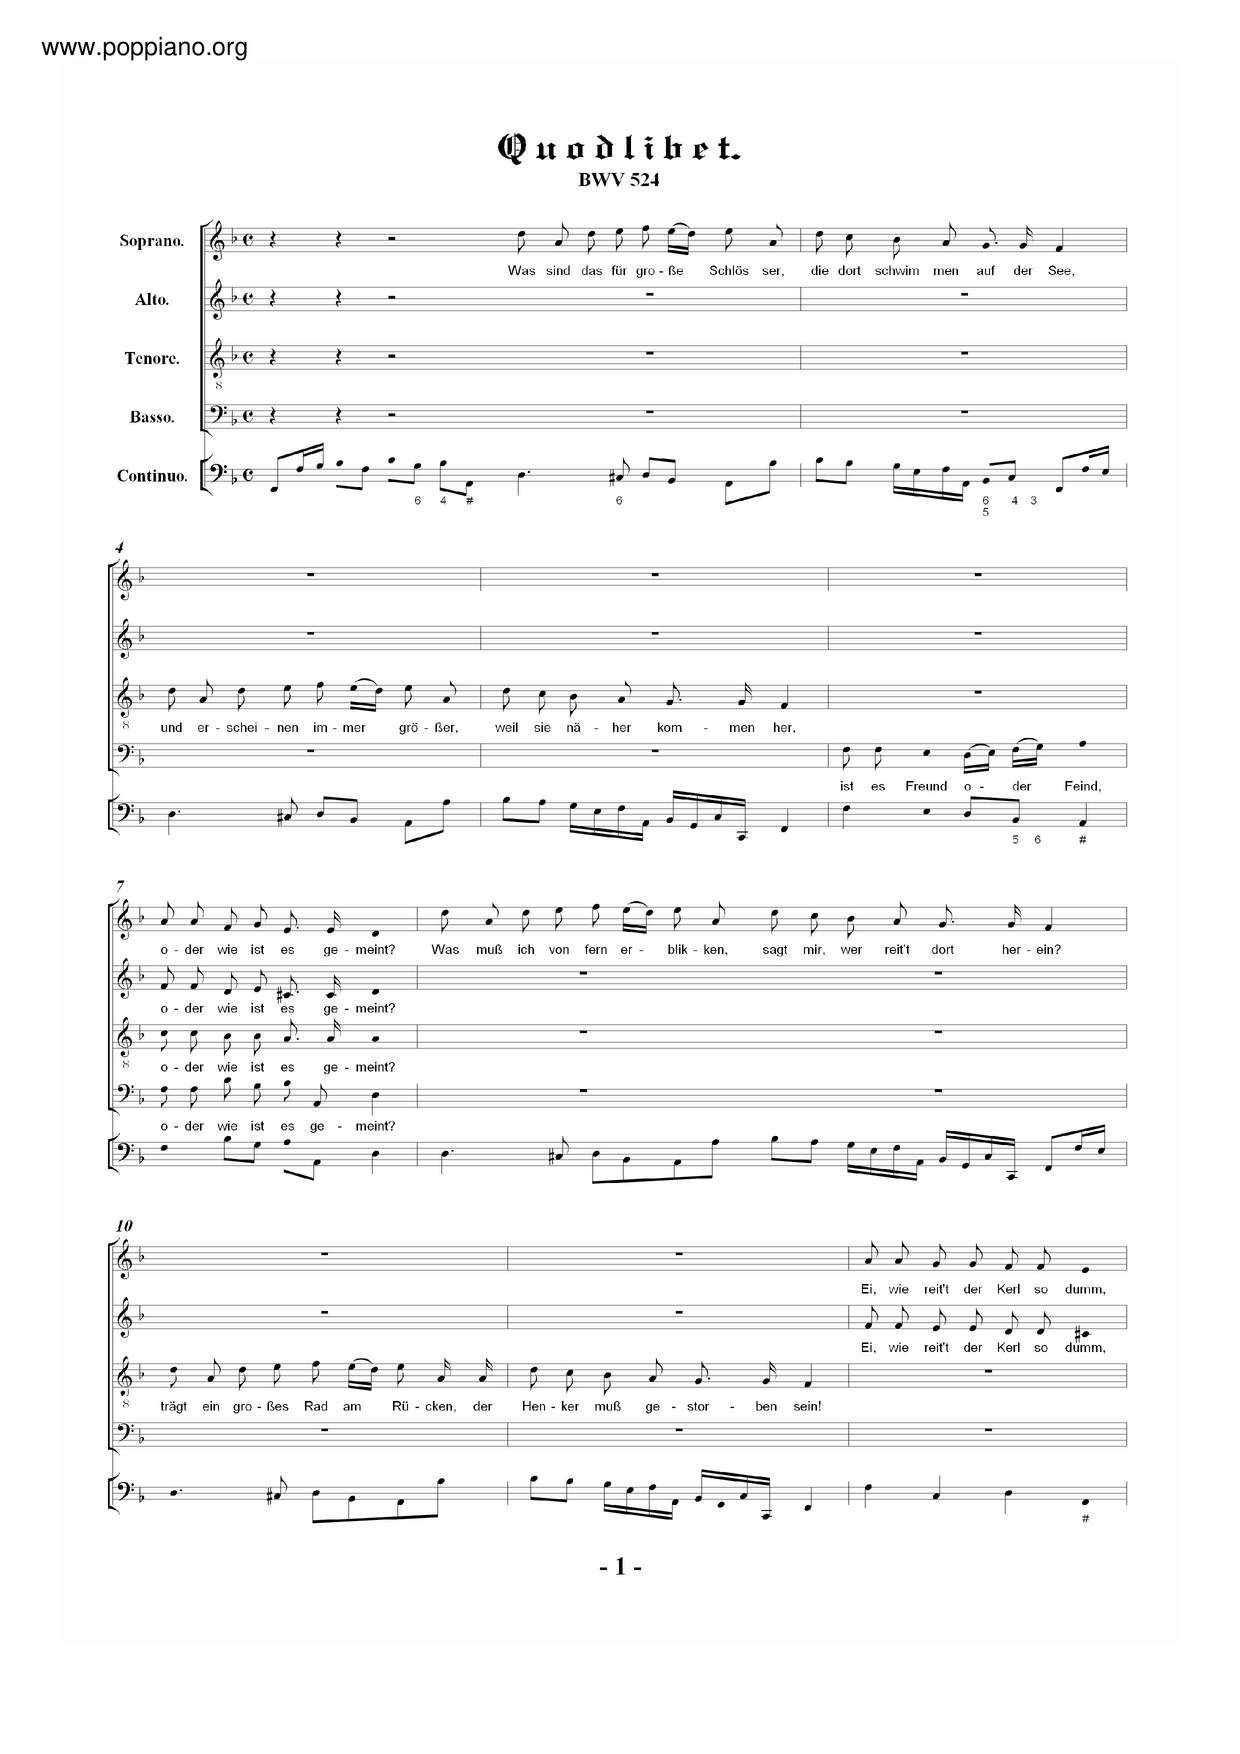 Quodlibet, BWV 524 Score